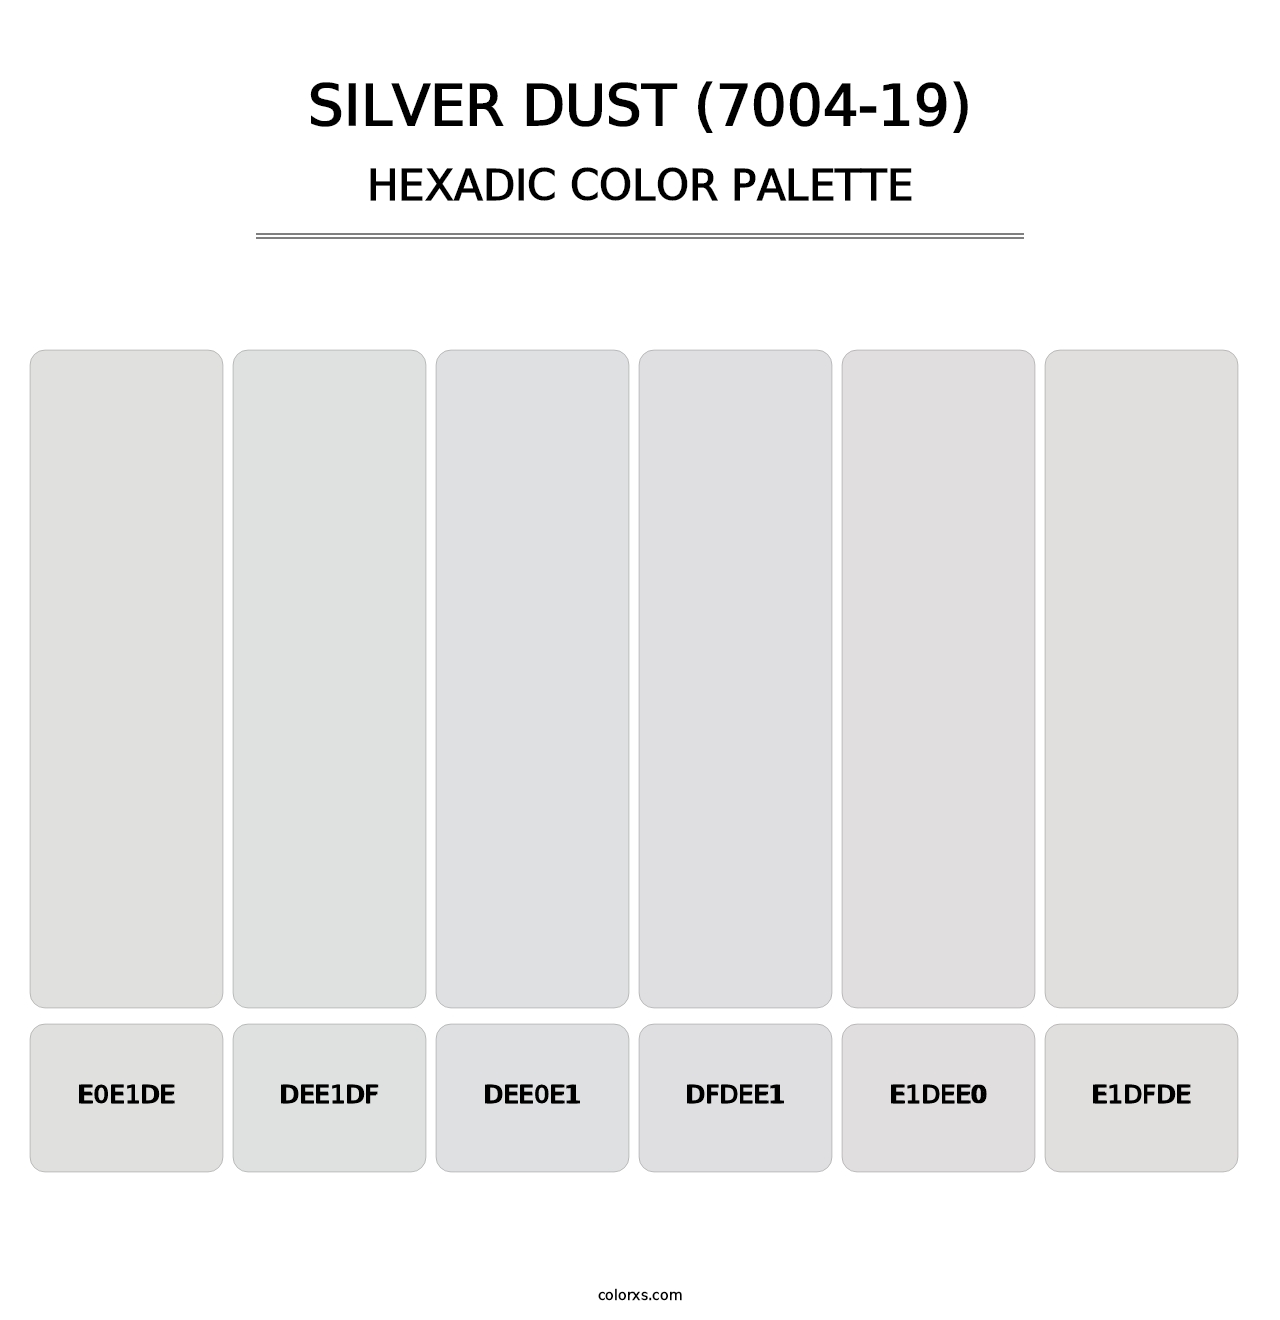 Silver Dust (7004-19) - Hexadic Color Palette